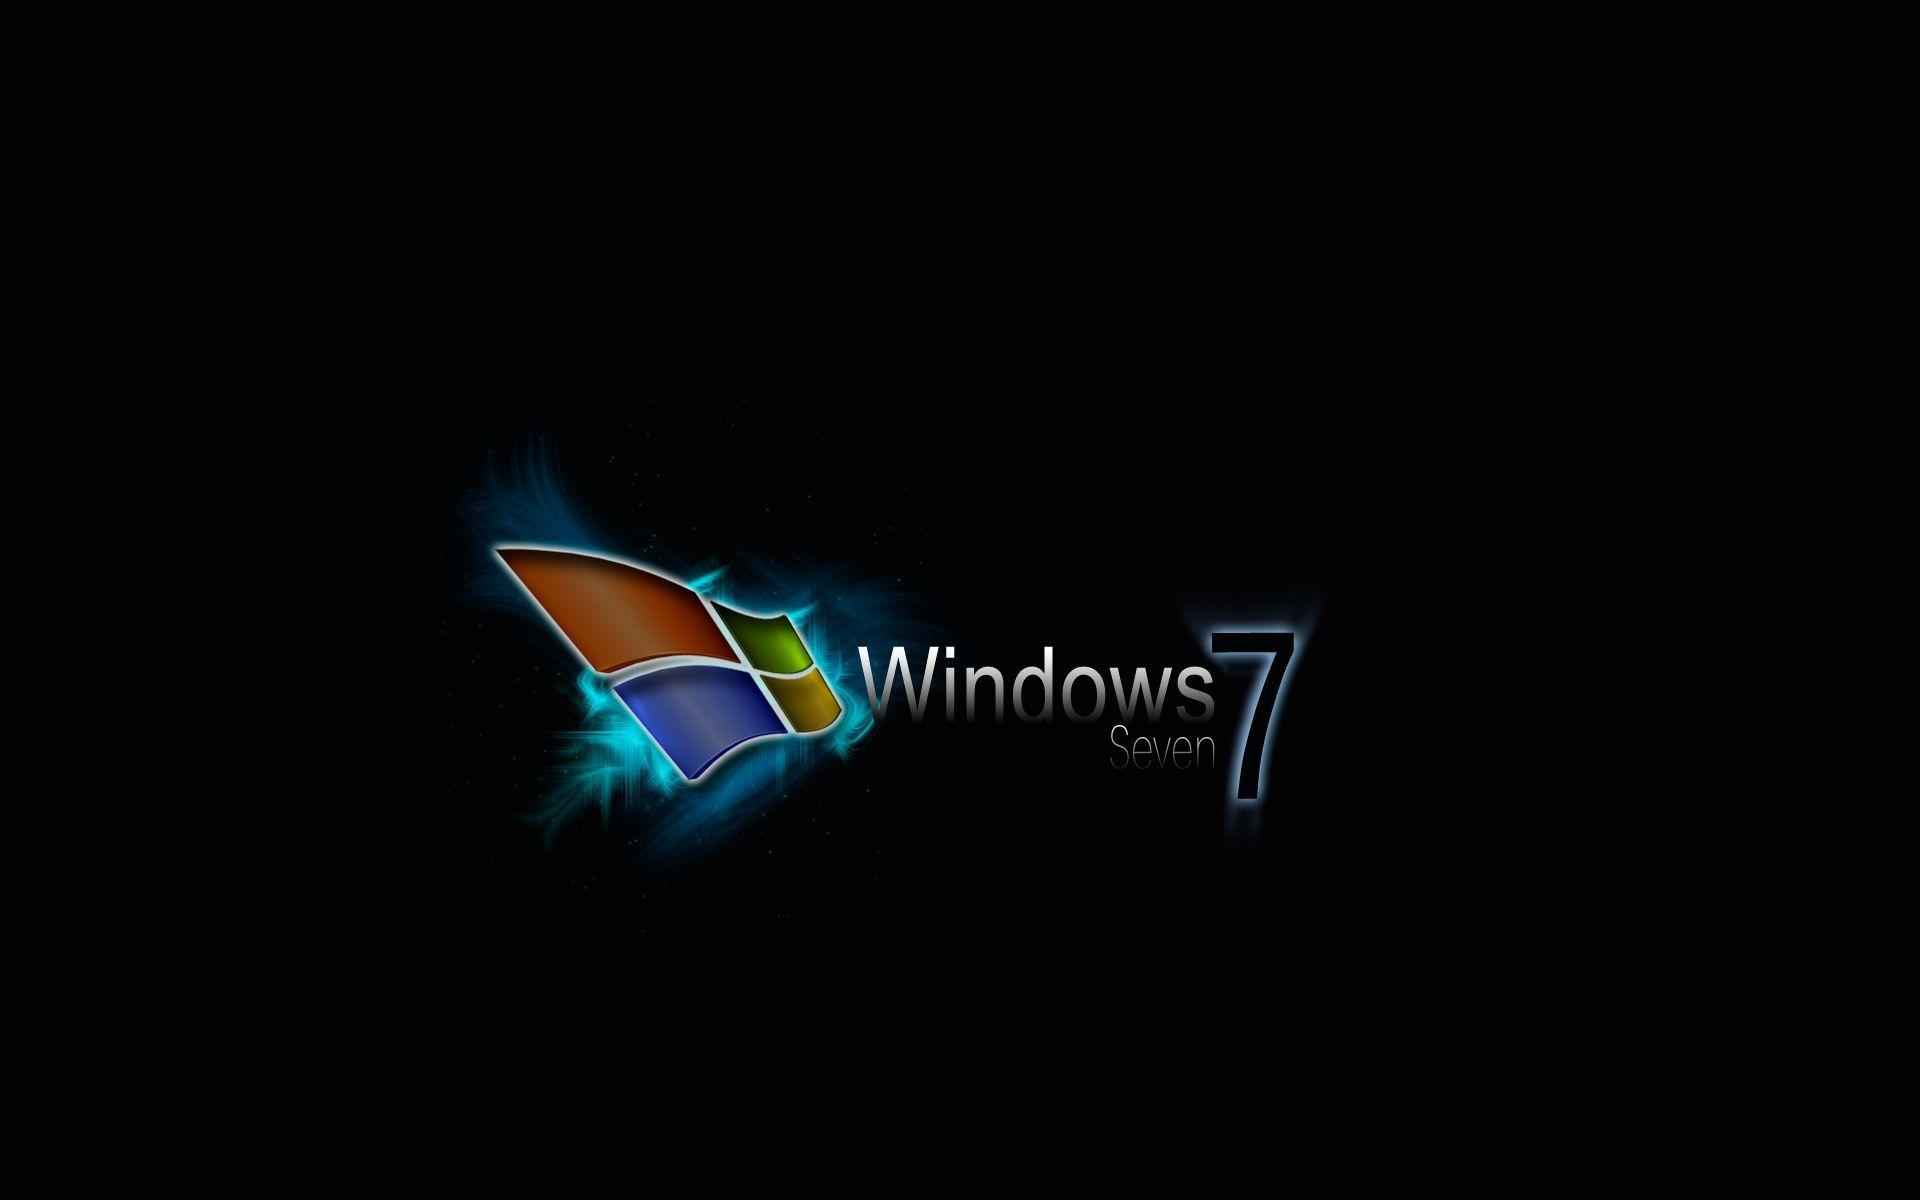 Windows 7 Professional Desktop Wallpapers - Top Những Hình Ảnh Đẹp